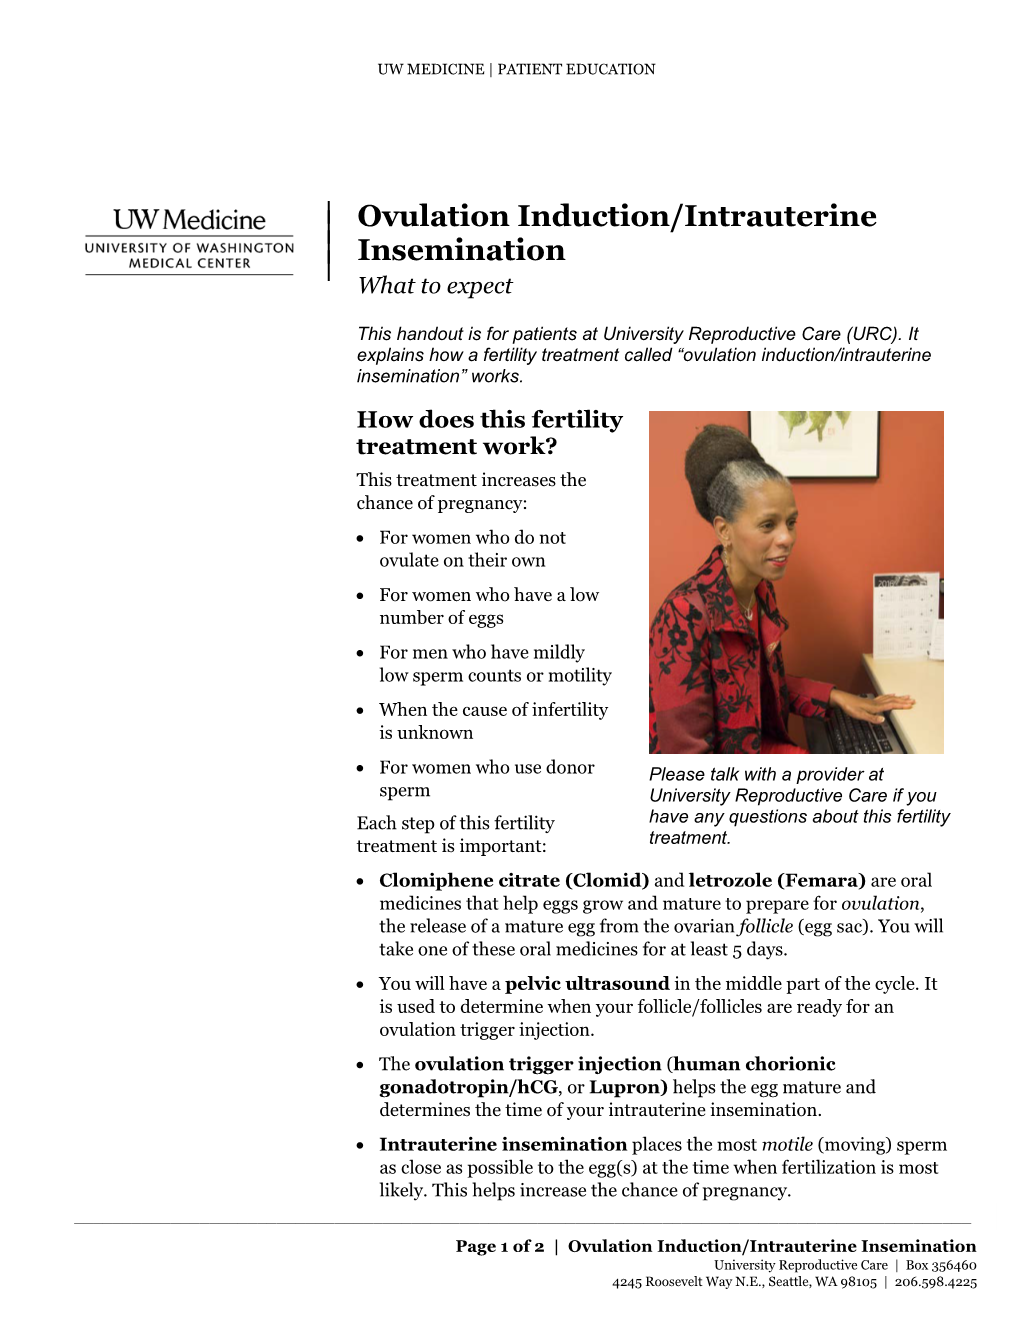 Ovulation Induction/Intrauterine Insemination” Works